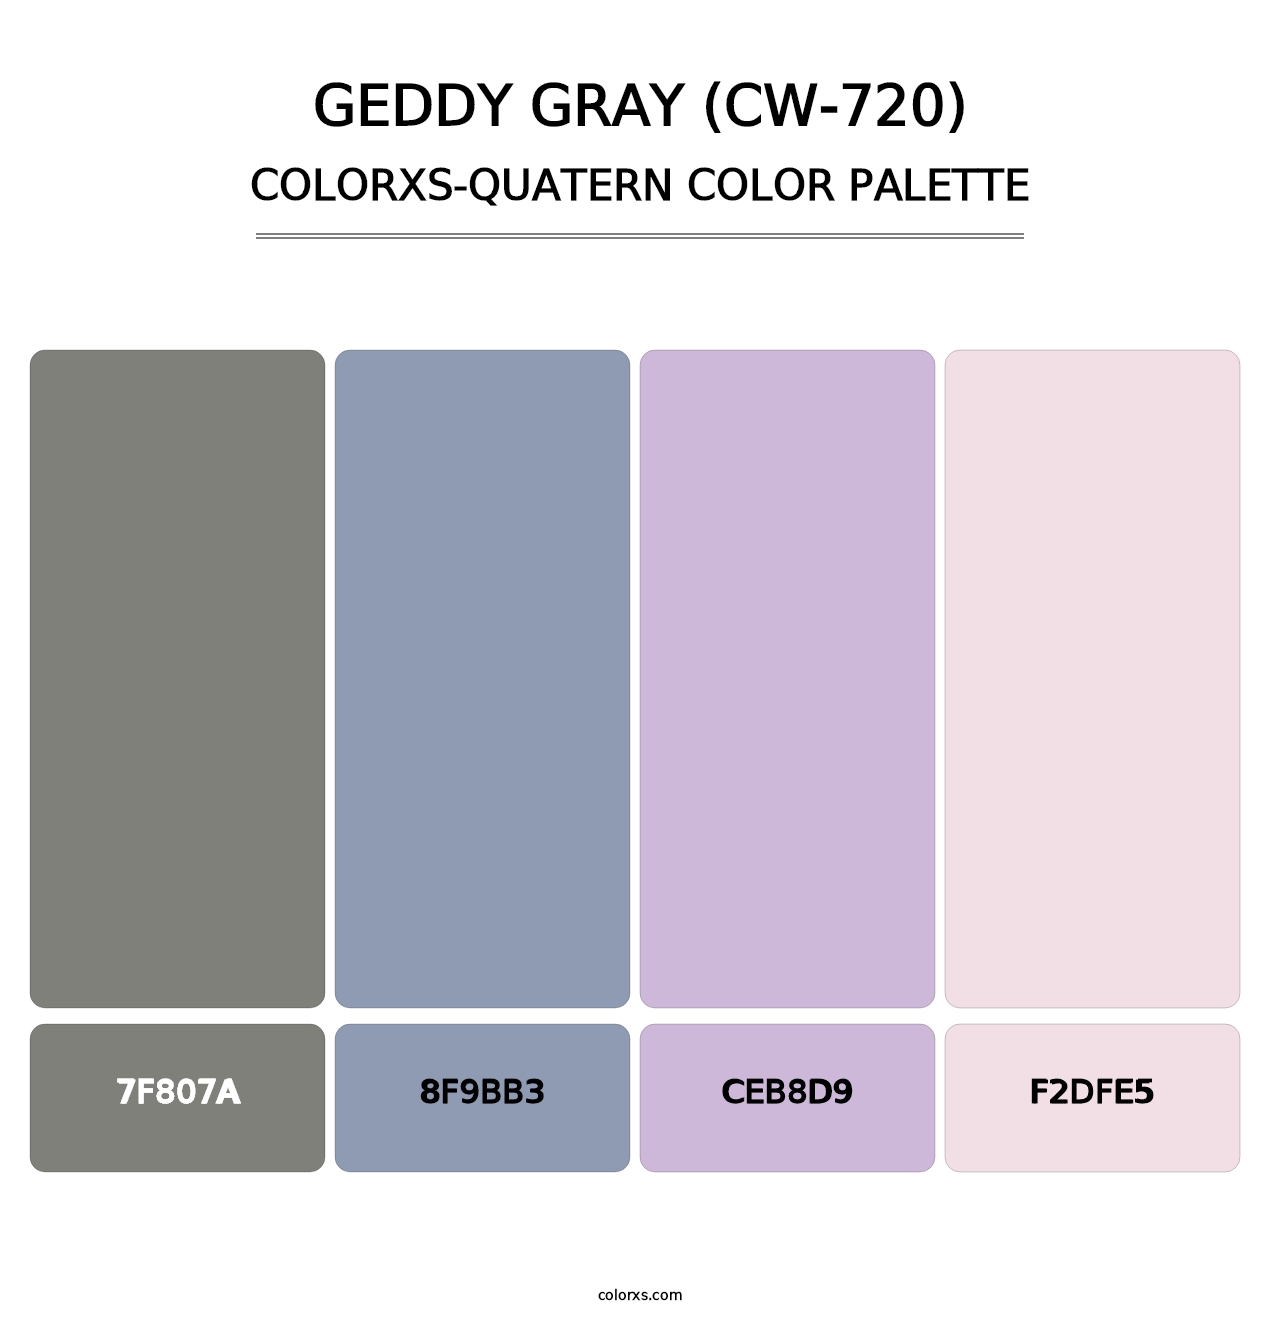 Geddy Gray (CW-720) - Colorxs Quatern Palette